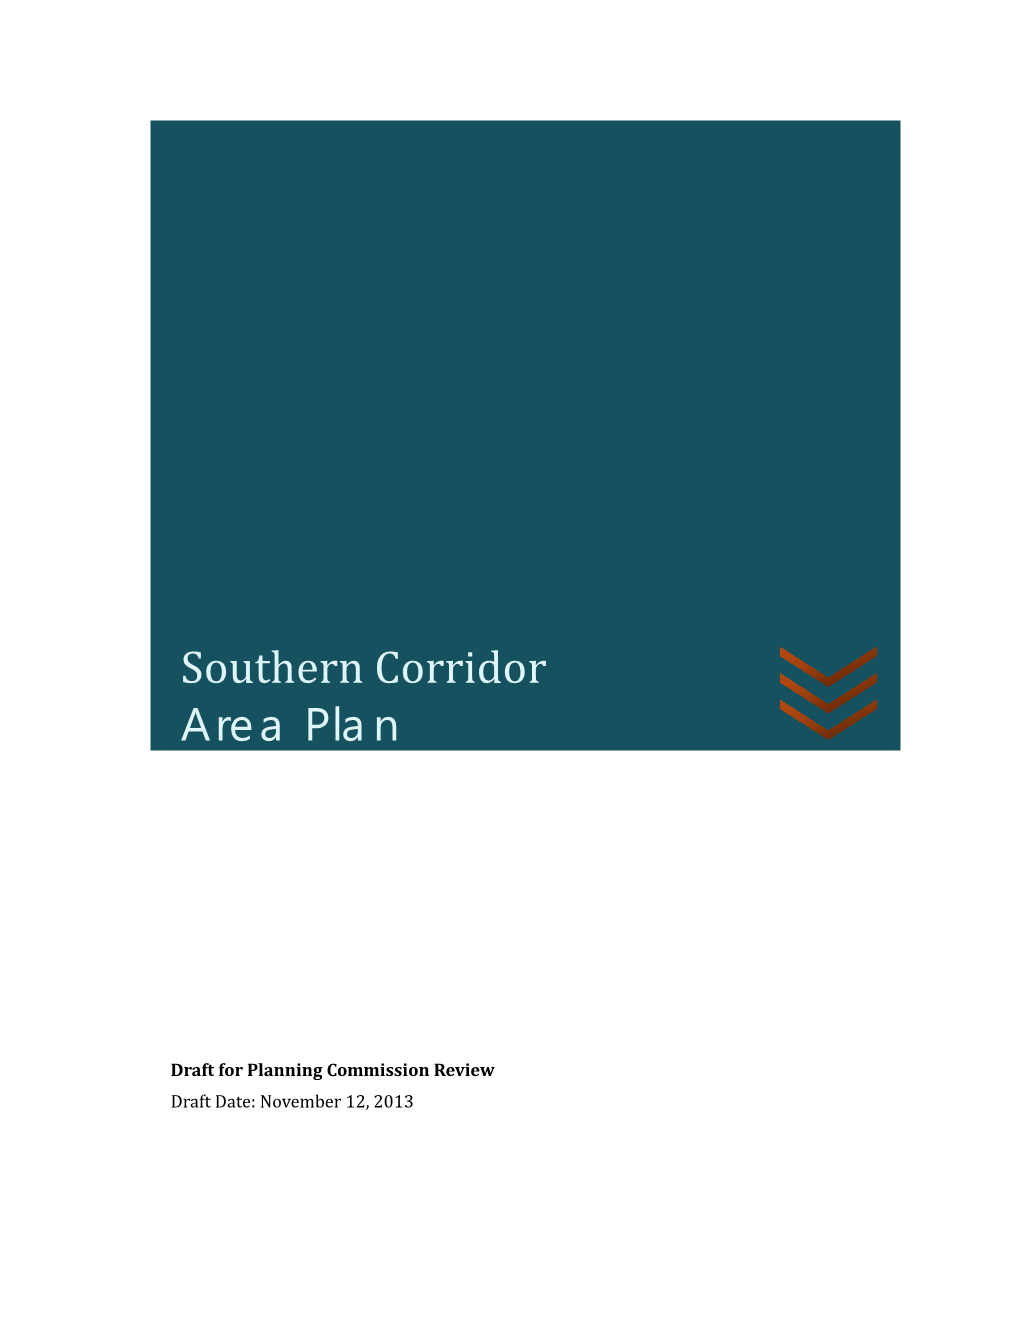 Southern Corridor Area Area Plan